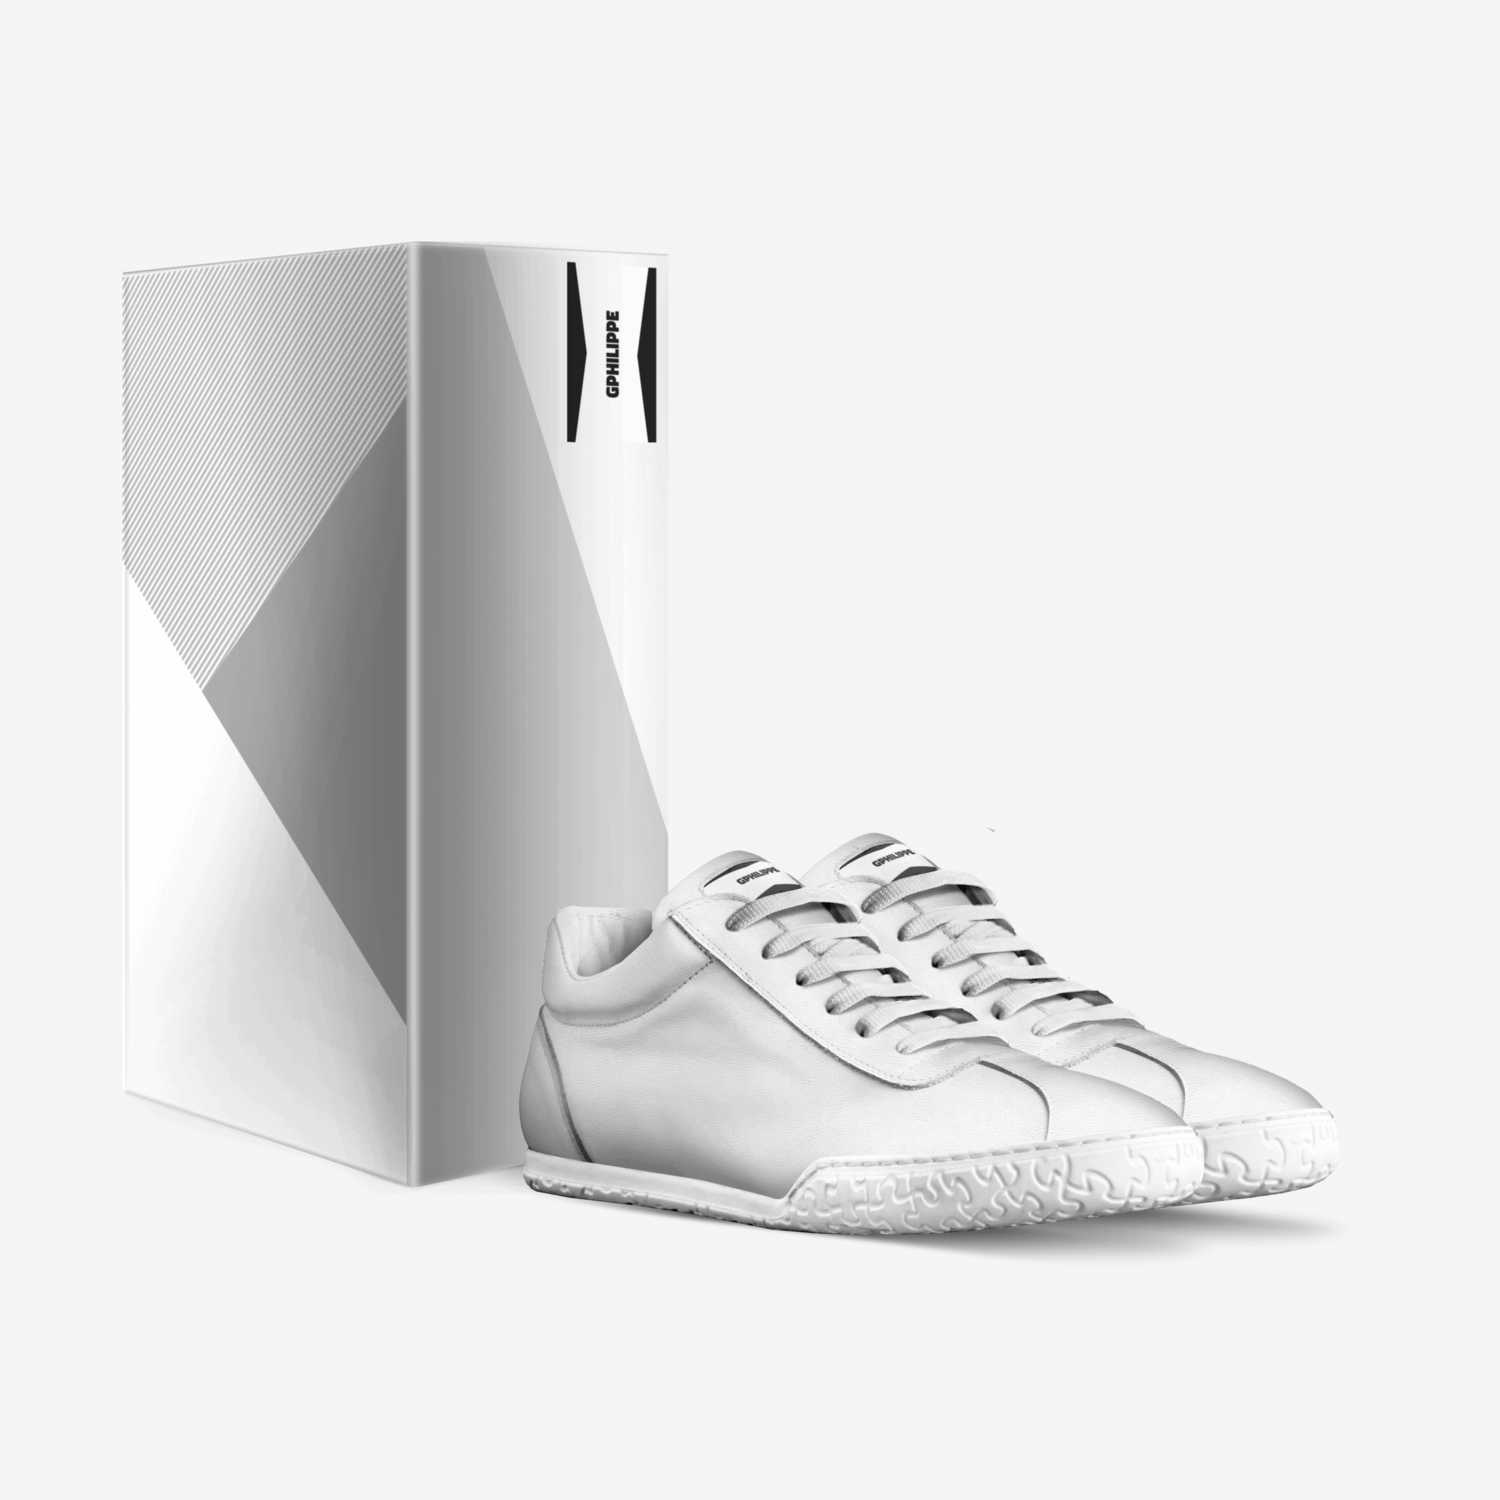 GPHILIPPE custom made in Italy shoes by Gleenda Francis | Box view